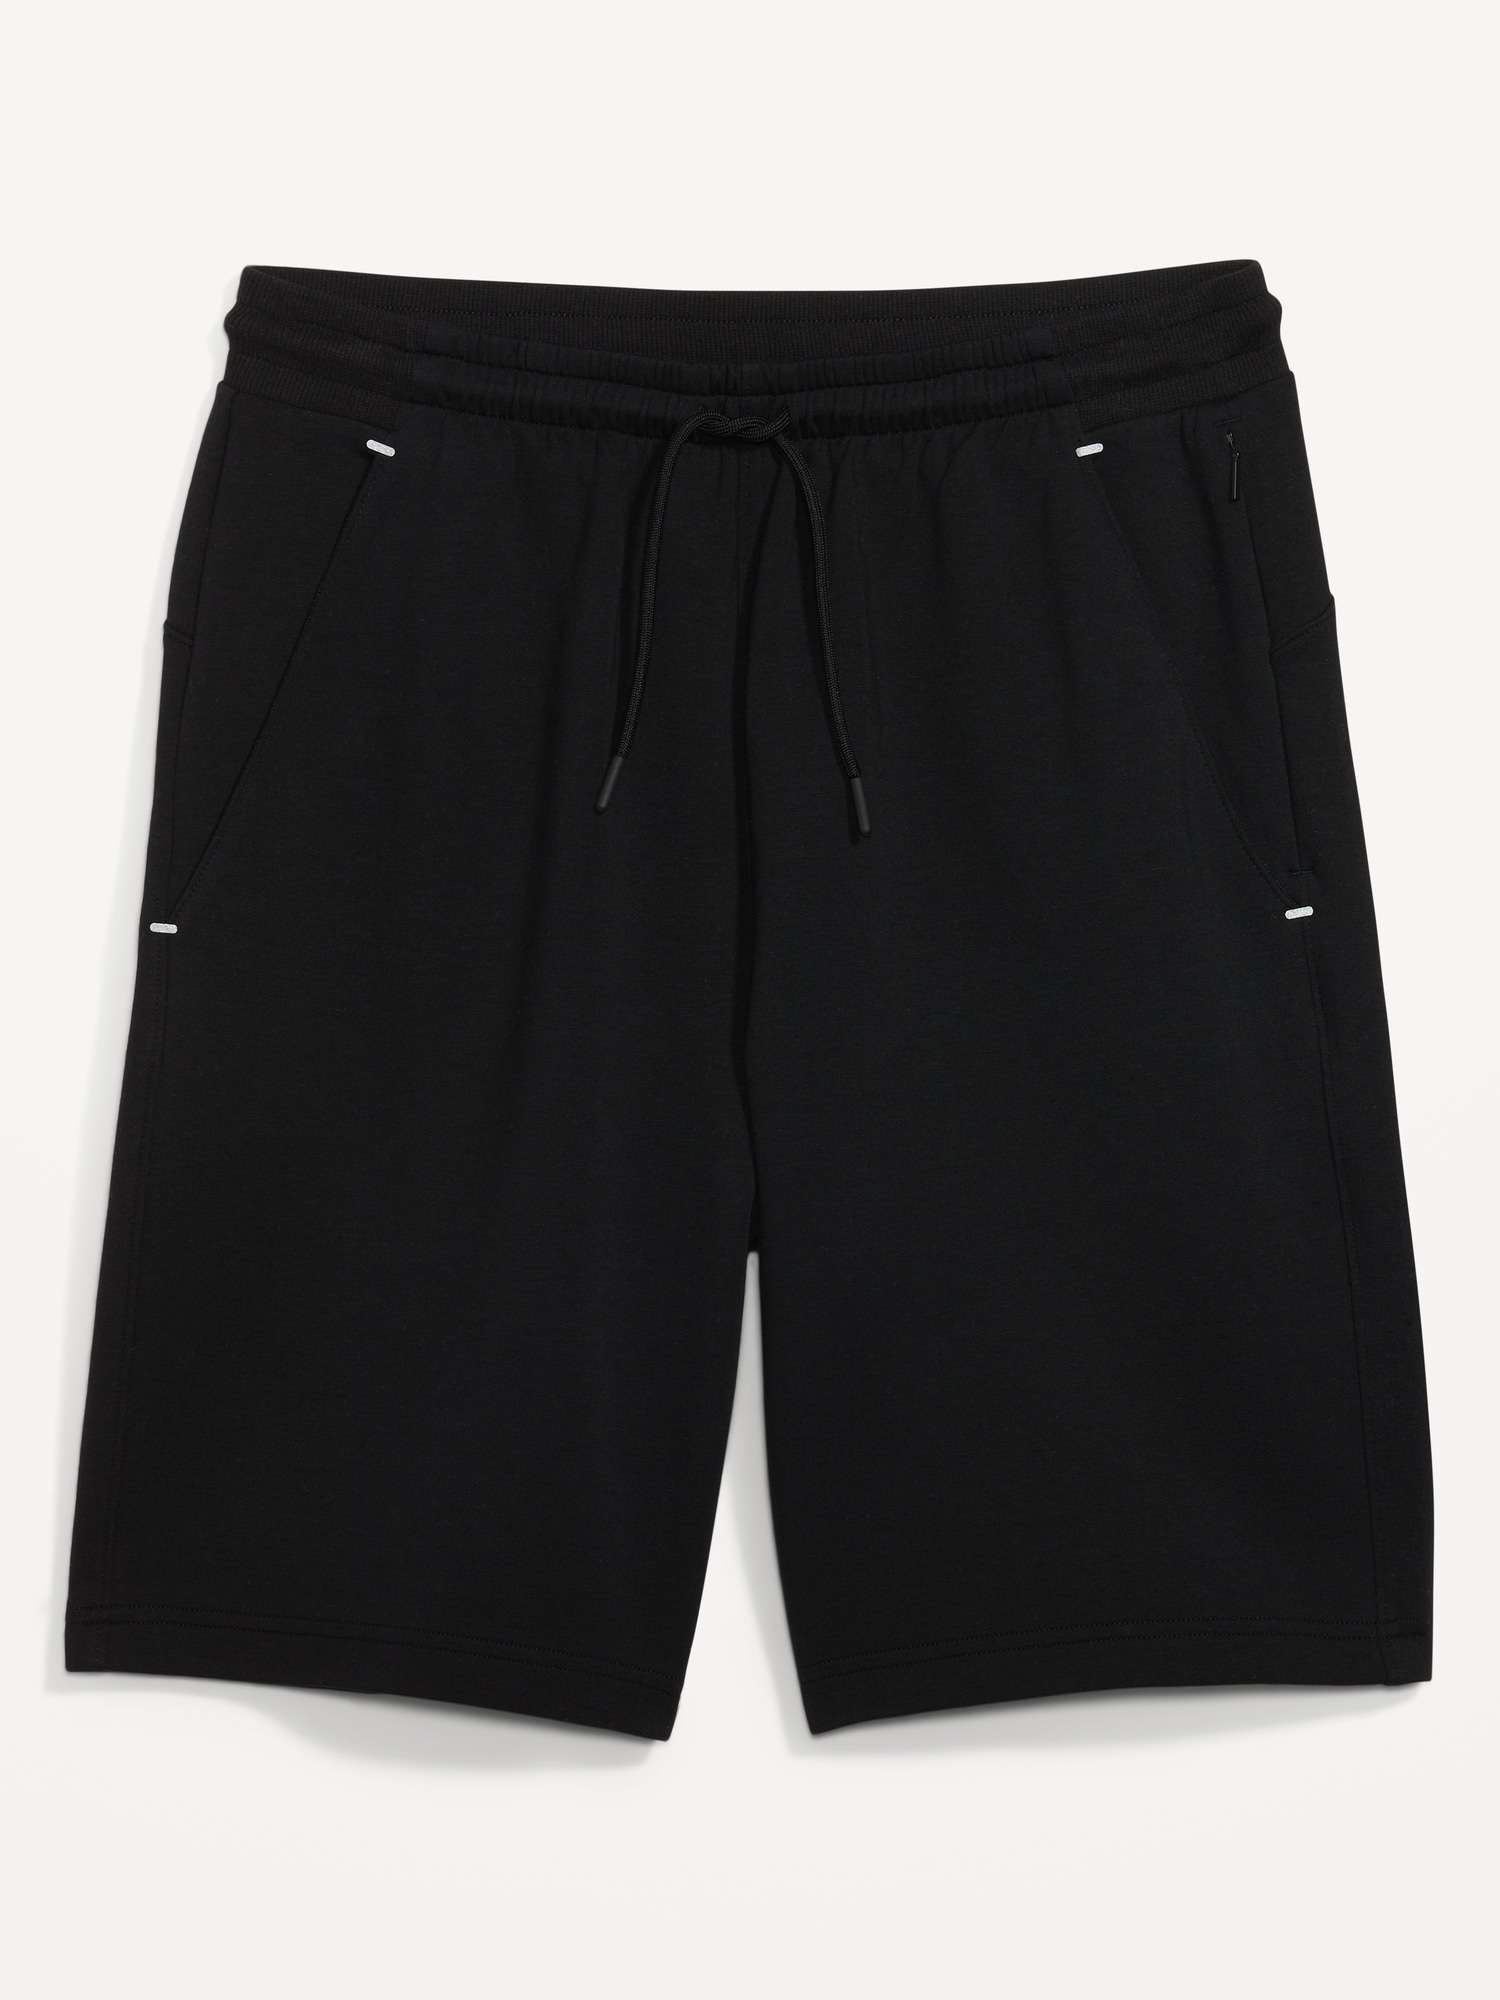 Dynamic Fleece Sweat Shorts -- 9-inch inseam | Old Navy